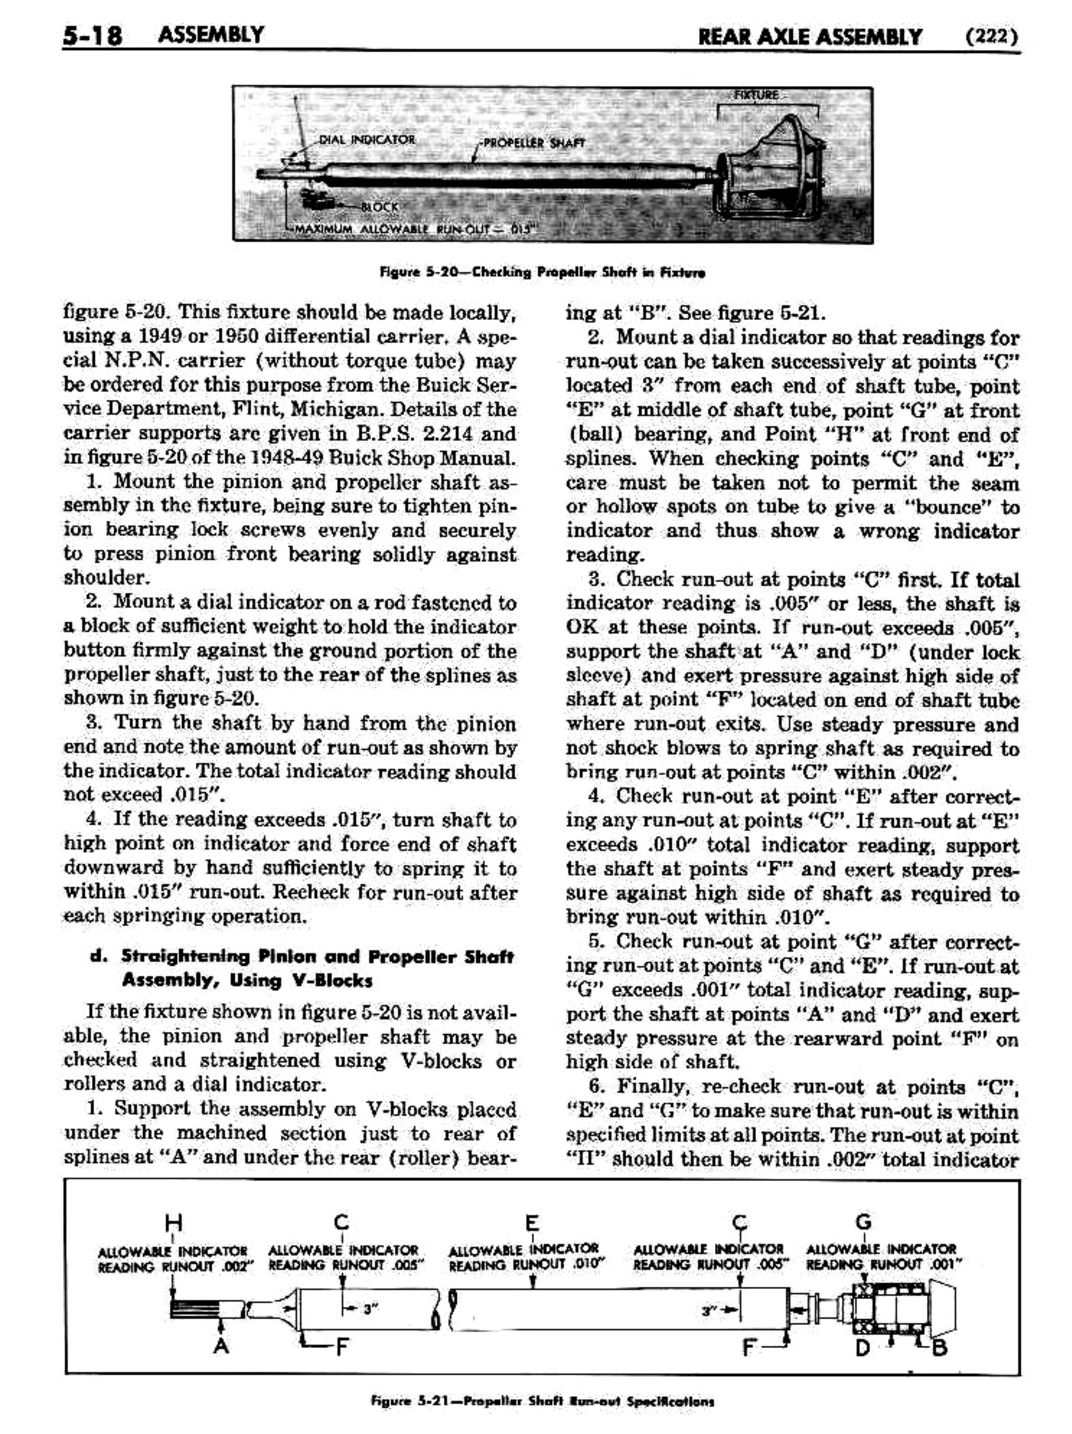 n_06 1951 Buick Shop Manual - Rear Axle-018-018.jpg